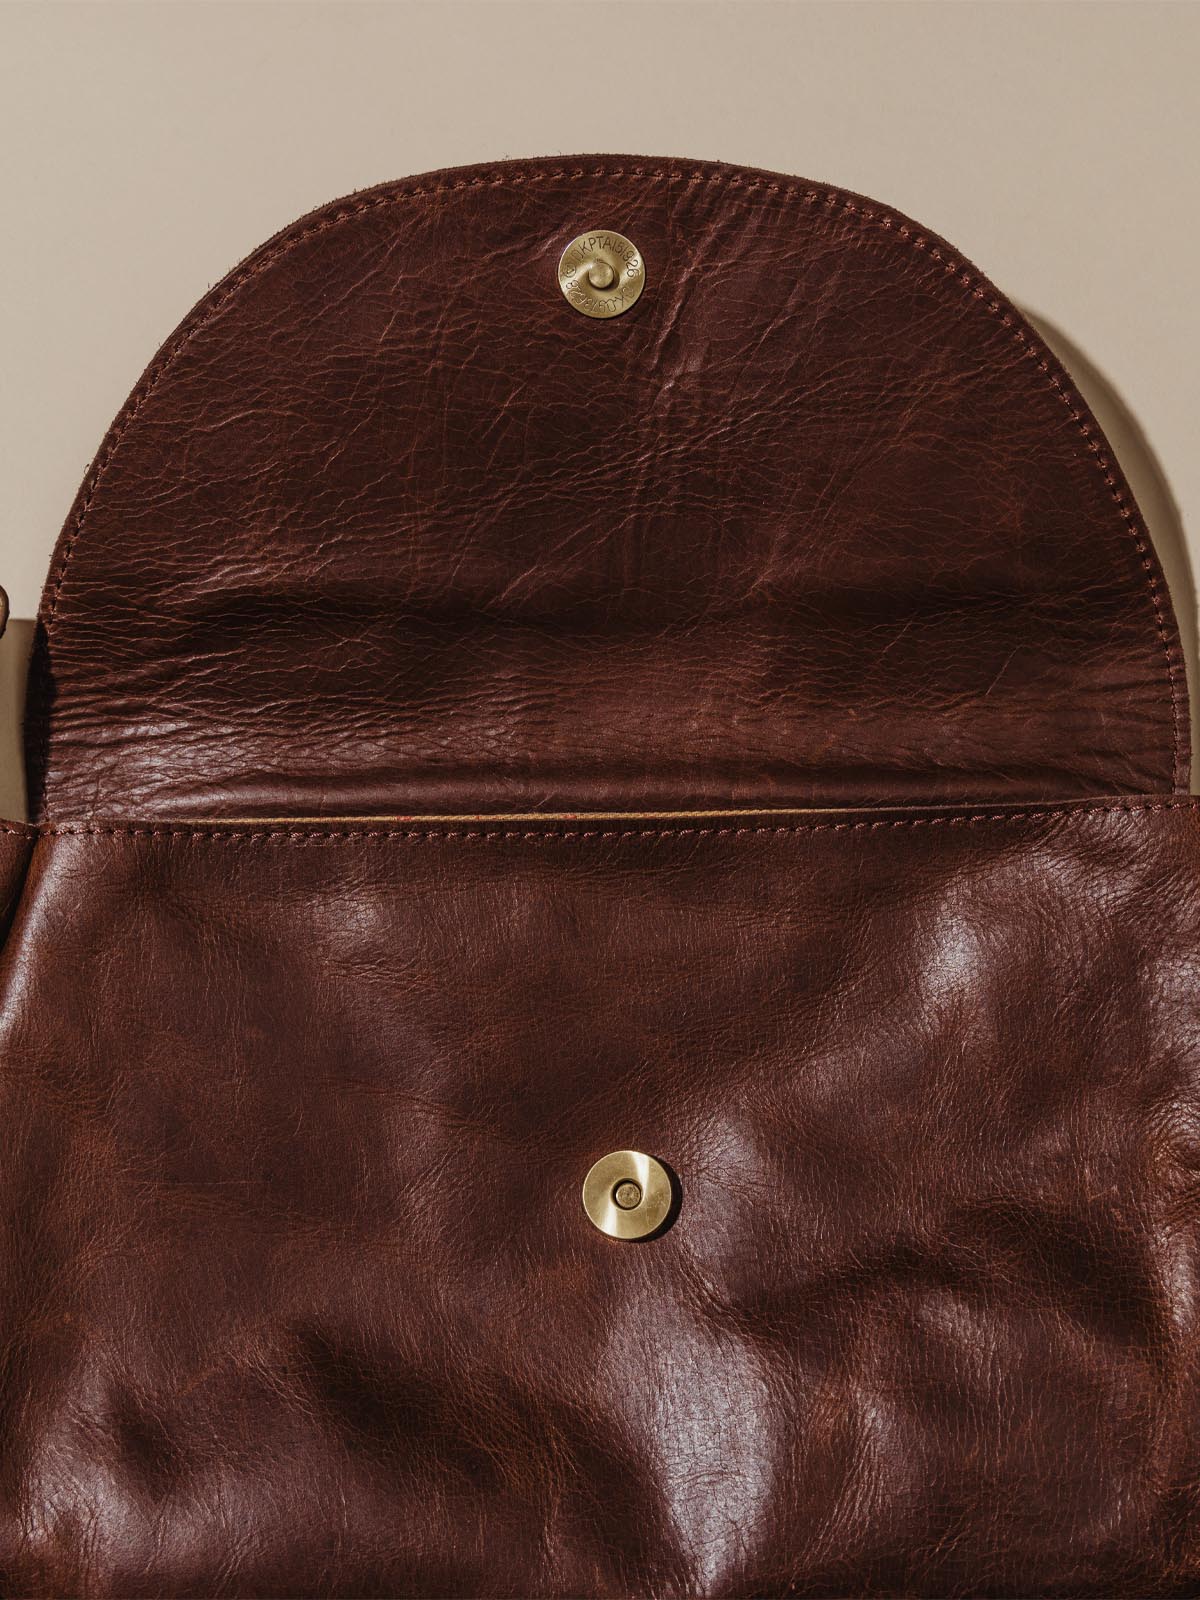 Close up image of purse clasp.